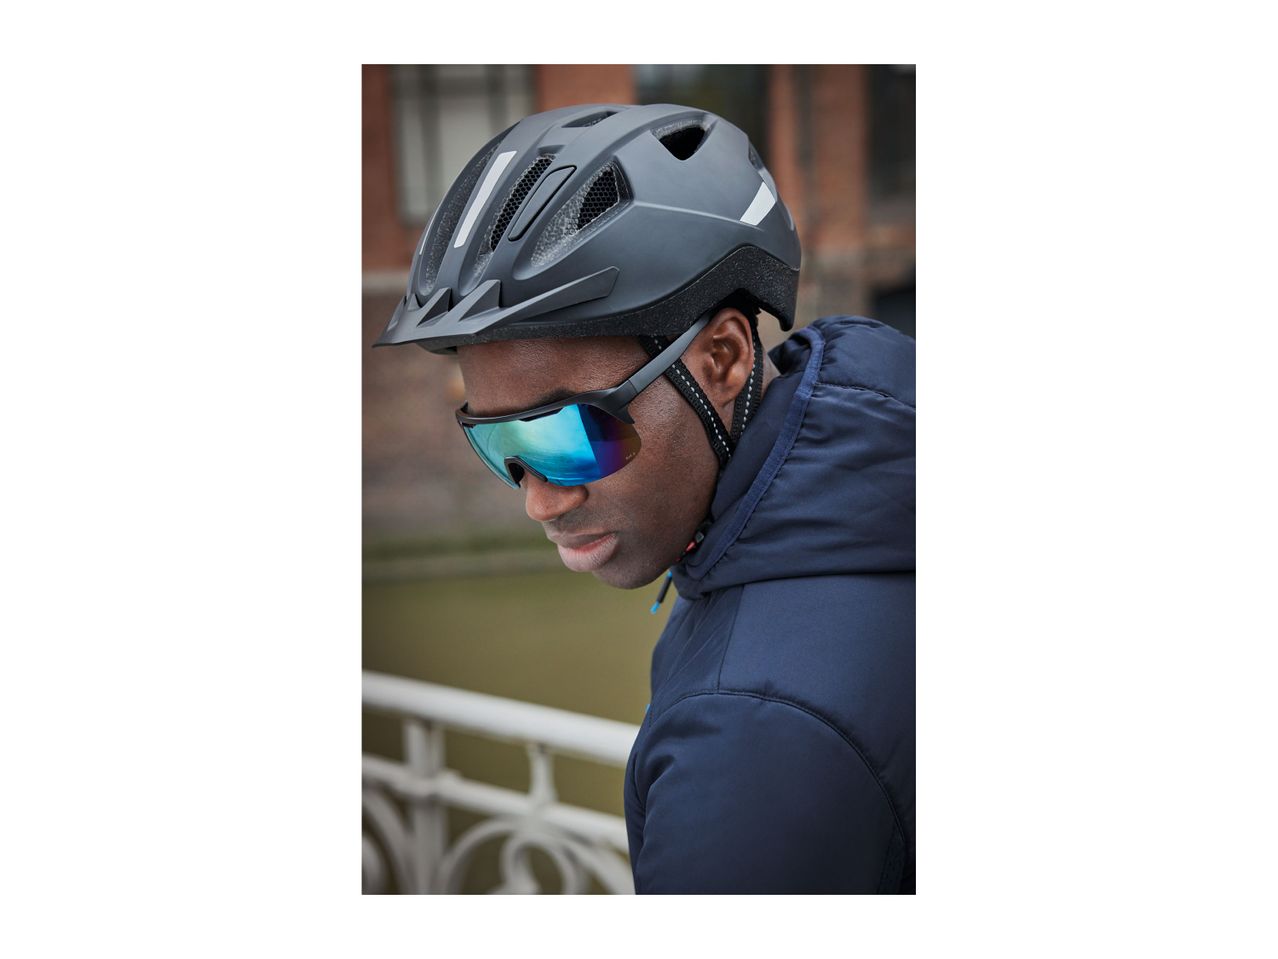 Go to full screen view: Crivit Bike Helmet with Rear Light - Image 4